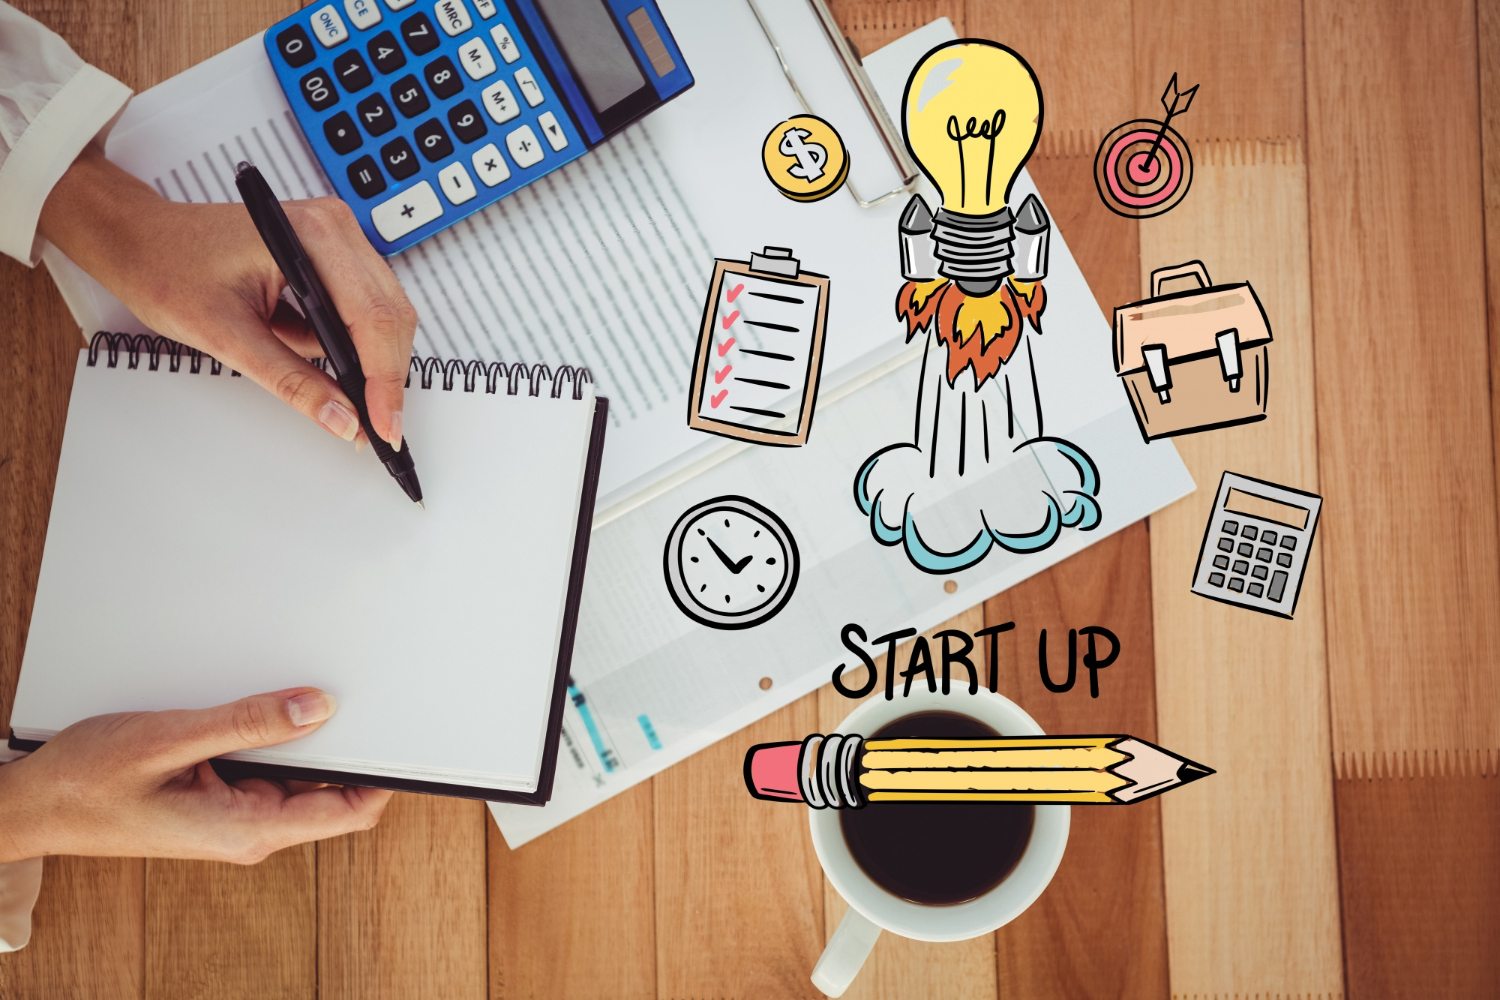 "Unleash Your Entrepreneurial Spirit Top 15 Startup Ideas To Dominate